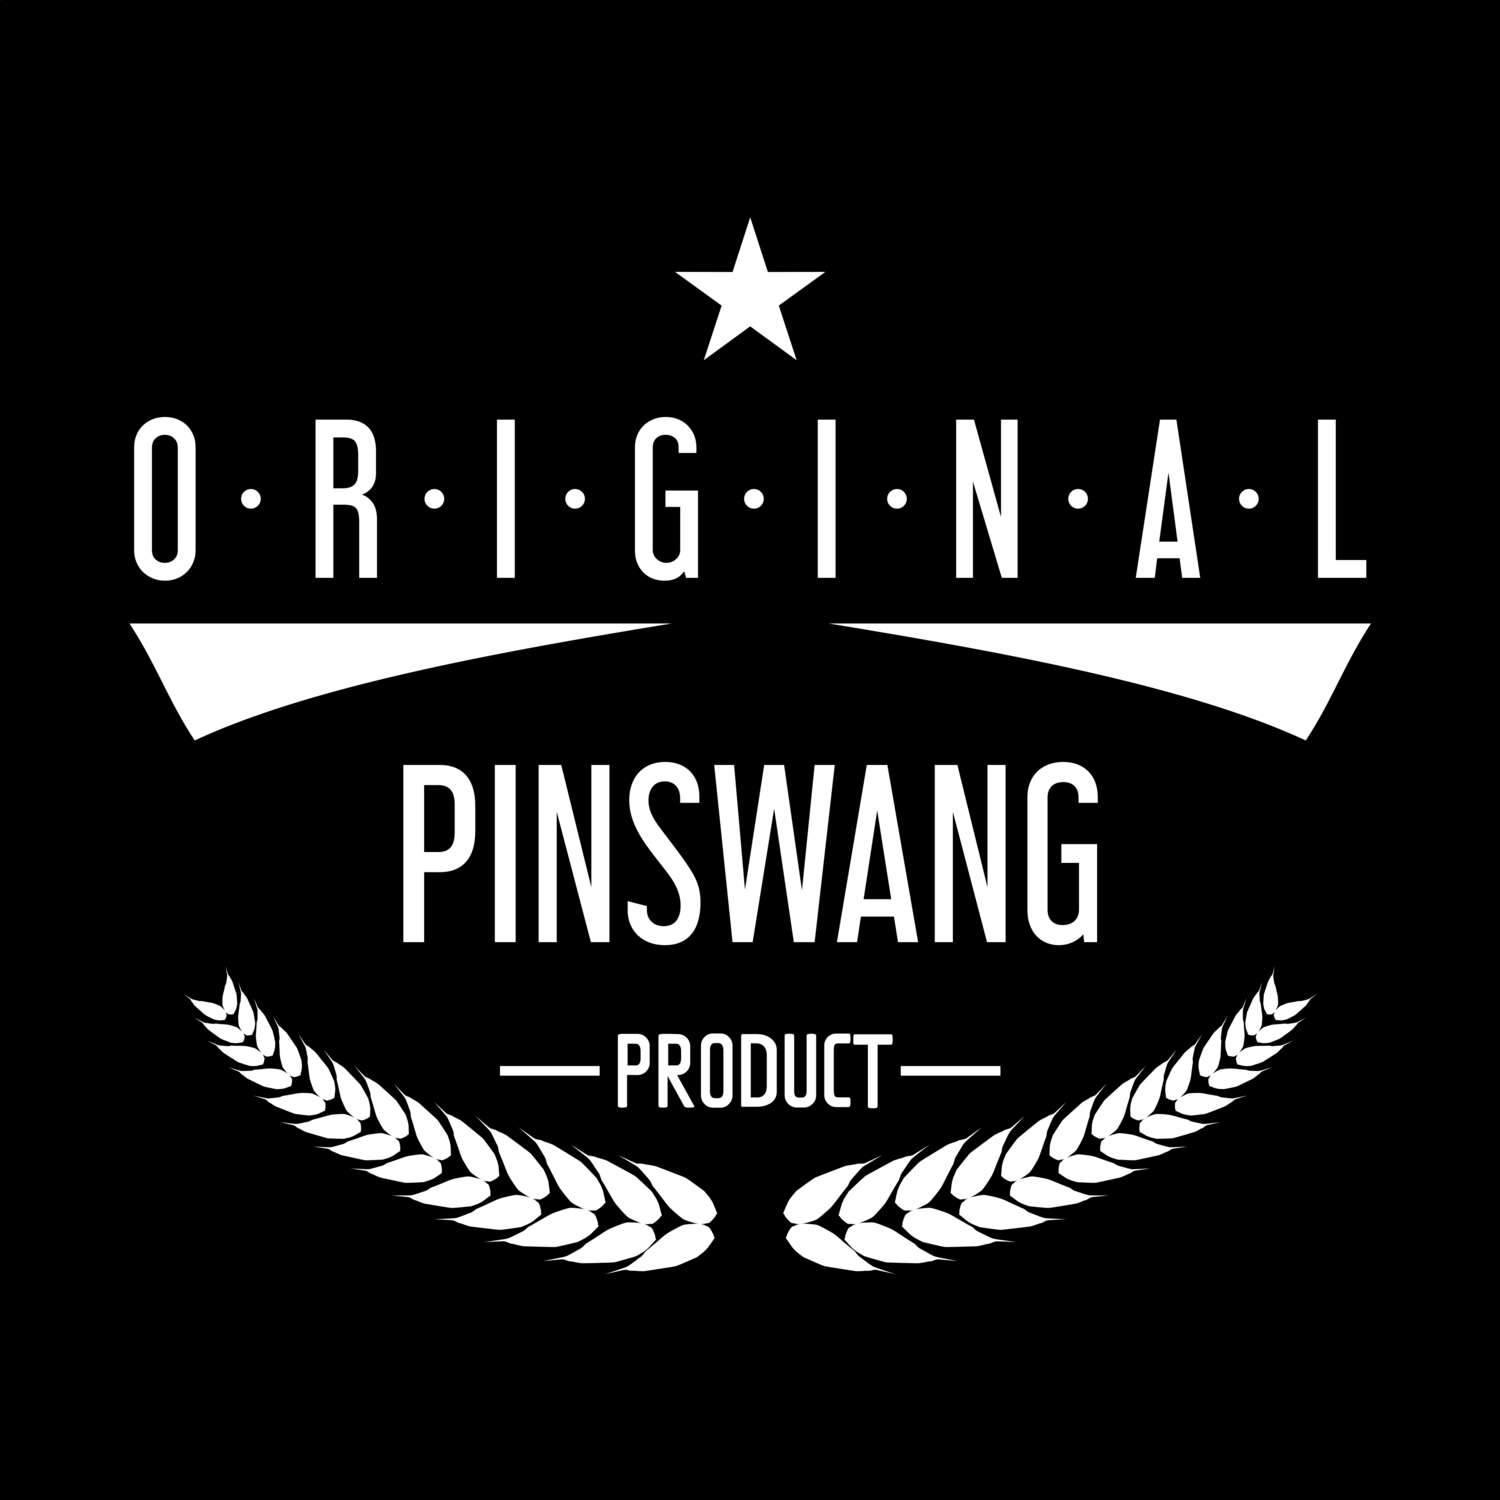 Pinswang T-Shirt »Original Product«